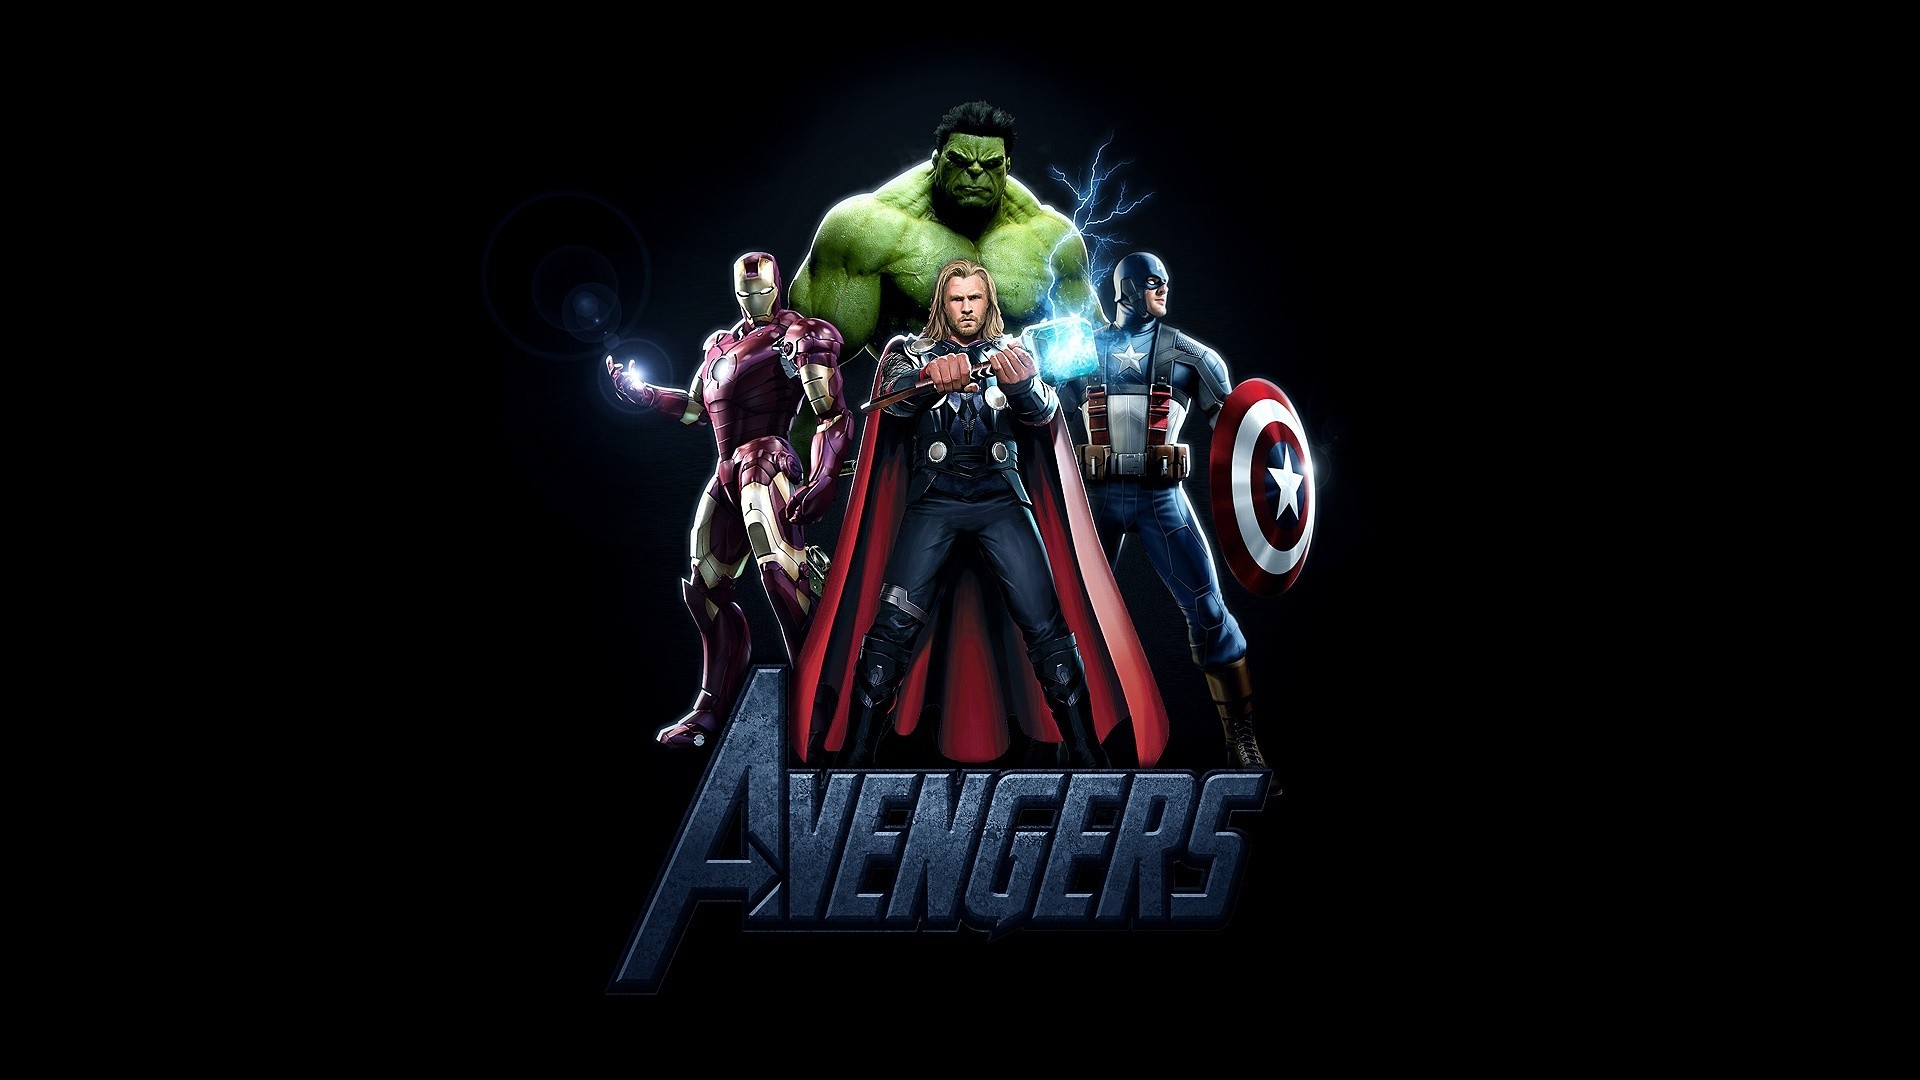 Marvel Studios Avengers Age Of Ultron 2015 Desktop Wallpaper Hd 1920x1200 :  Wallpapers13.com